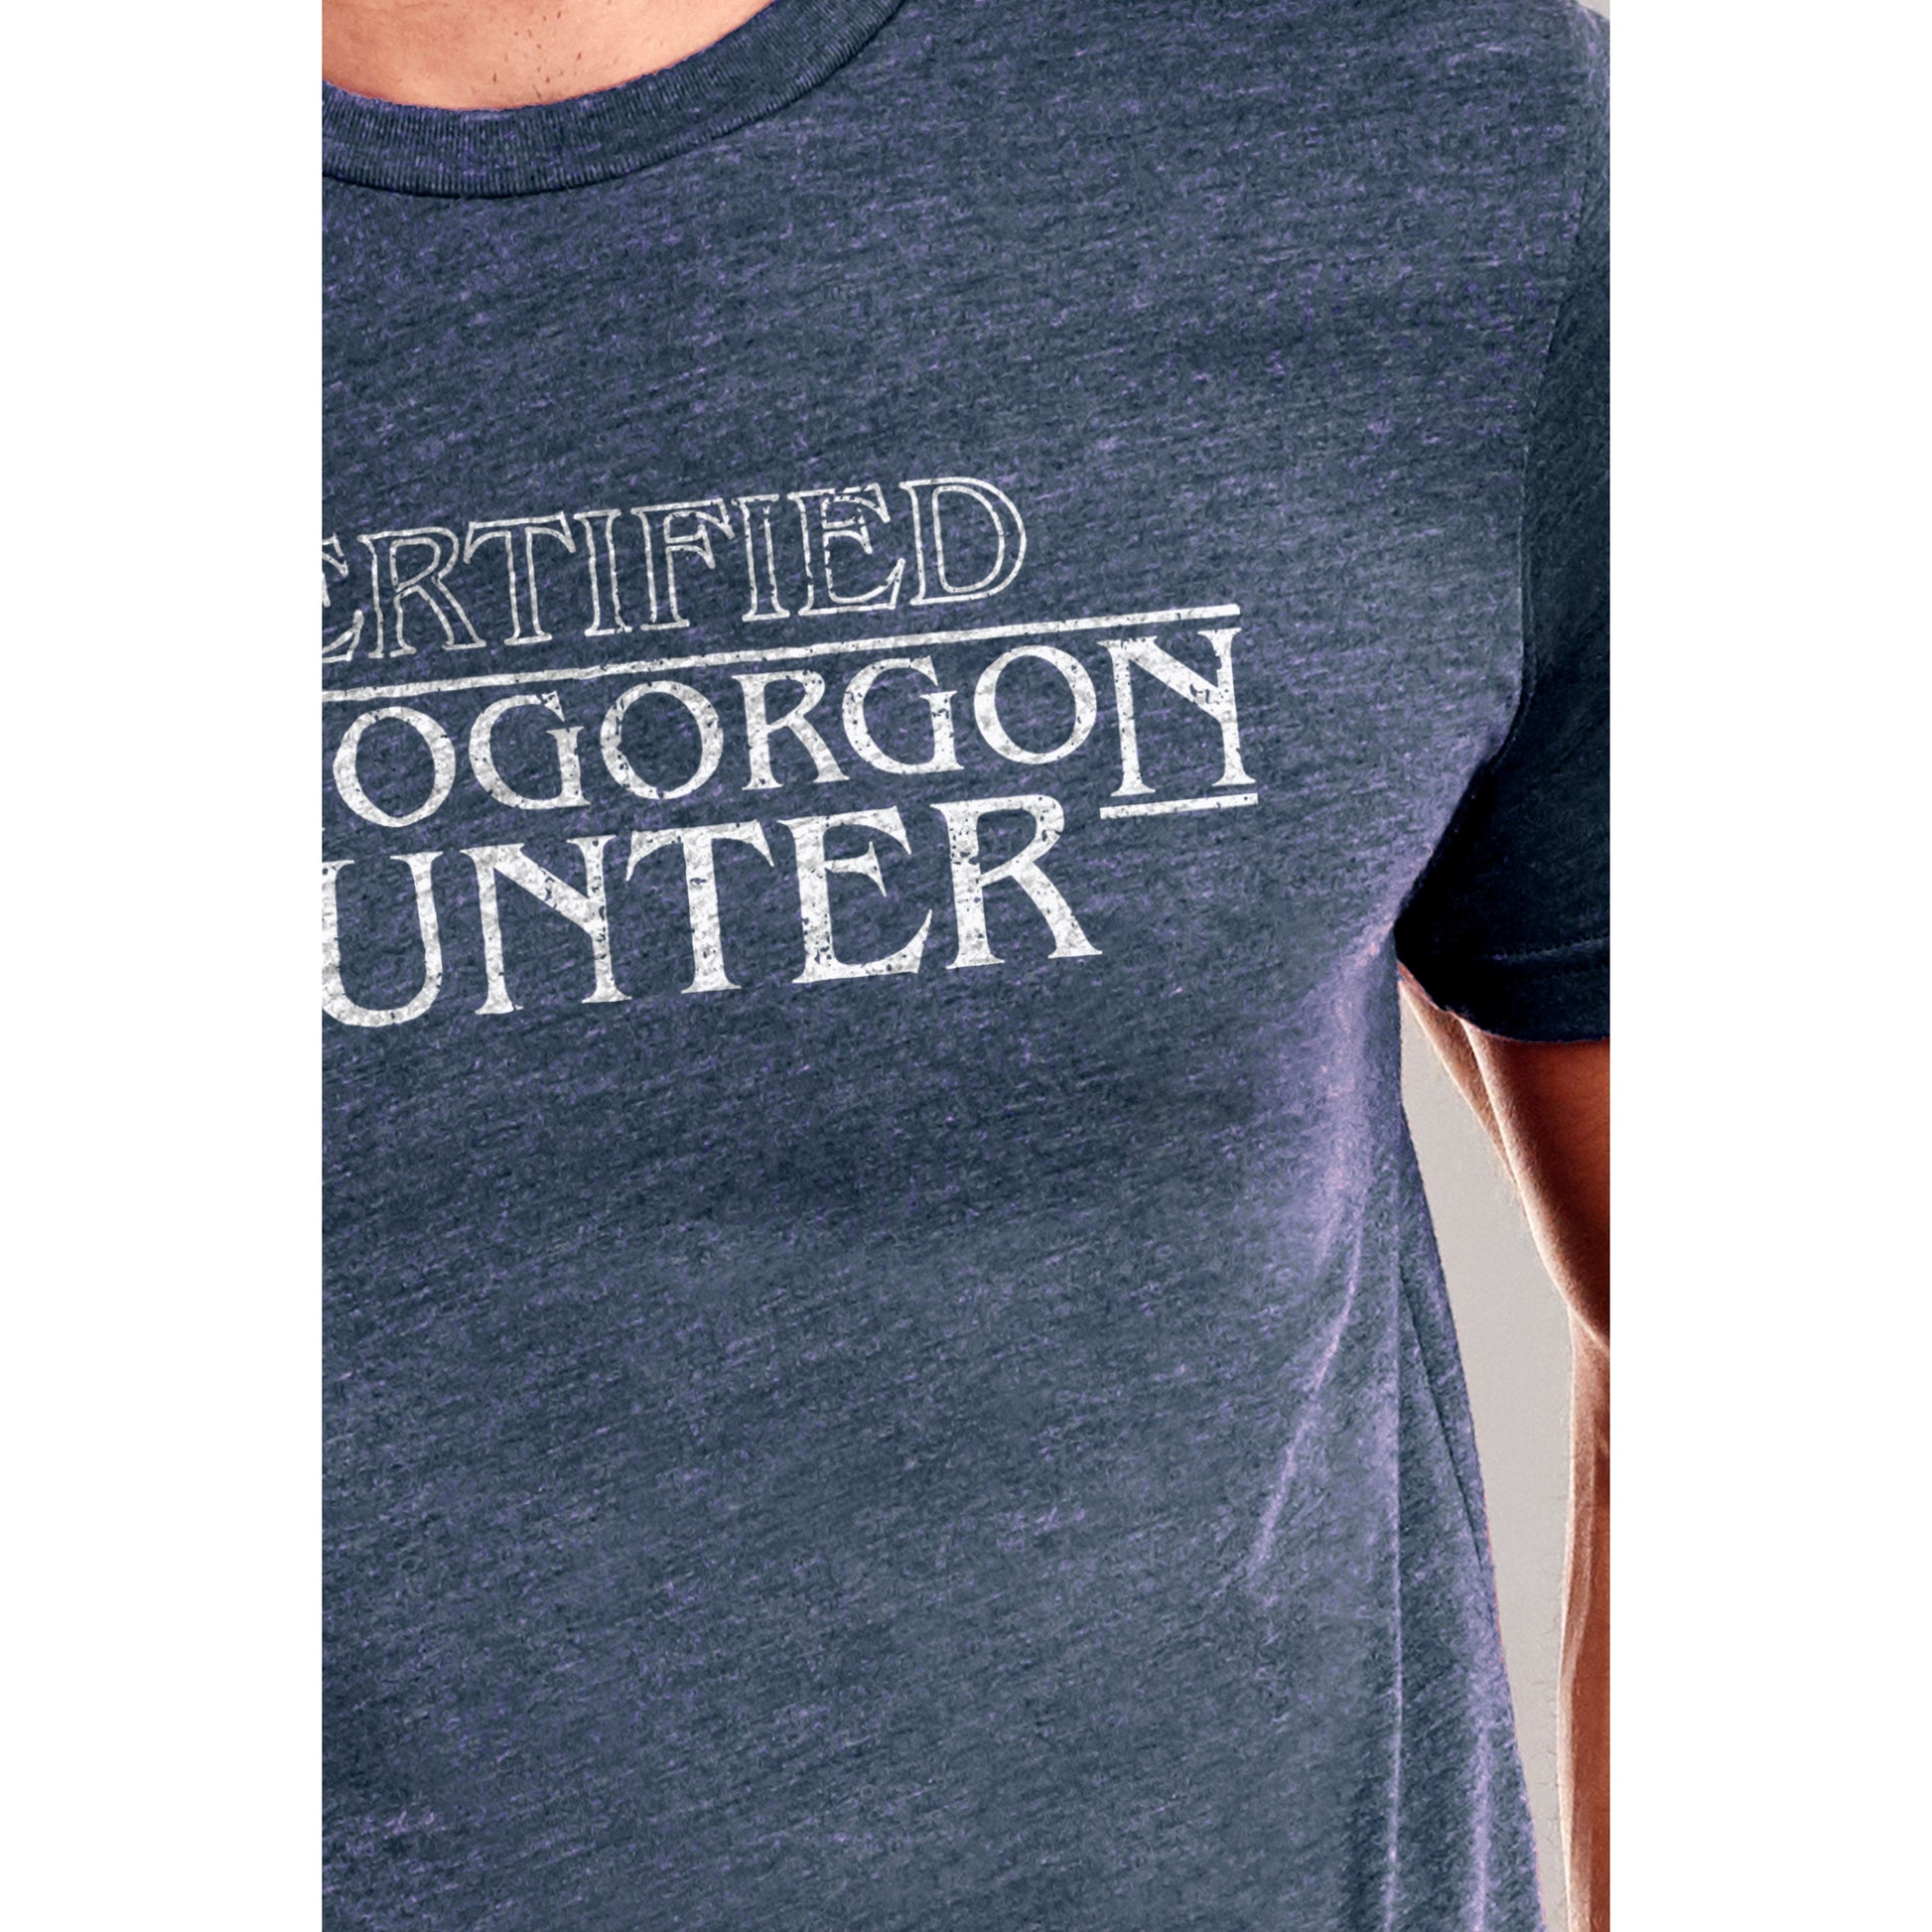 Certified Demogorgon Hunter - Stories You Can Wear